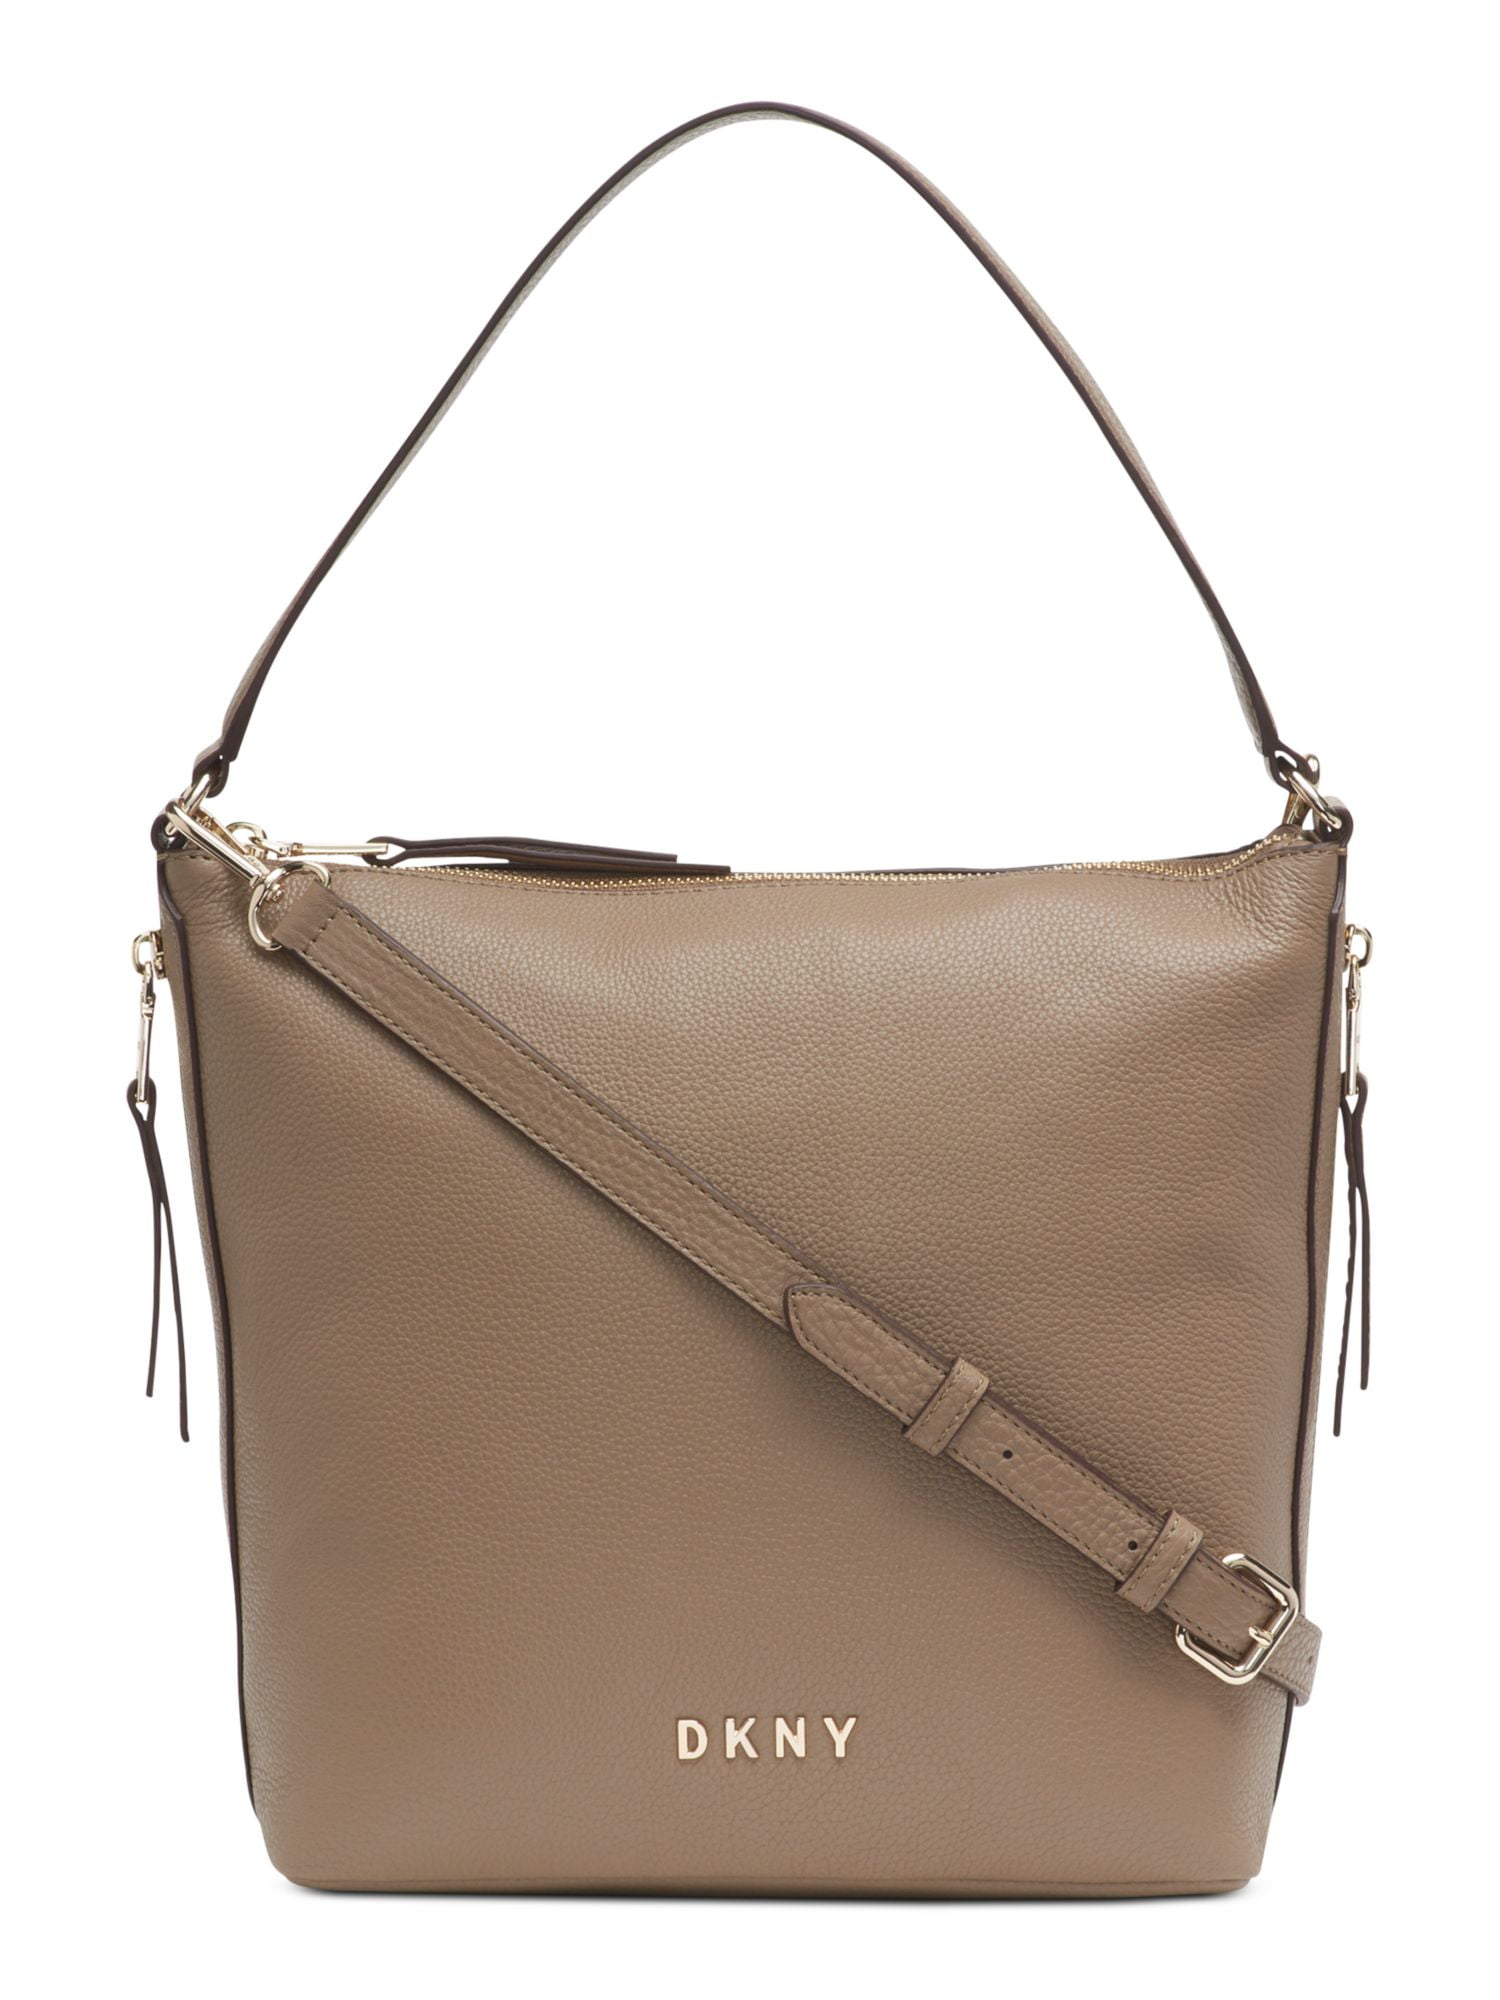 DKNY Women's Brown Leather Adjustable Strap Hobo Handbag Purse - Walmart.com